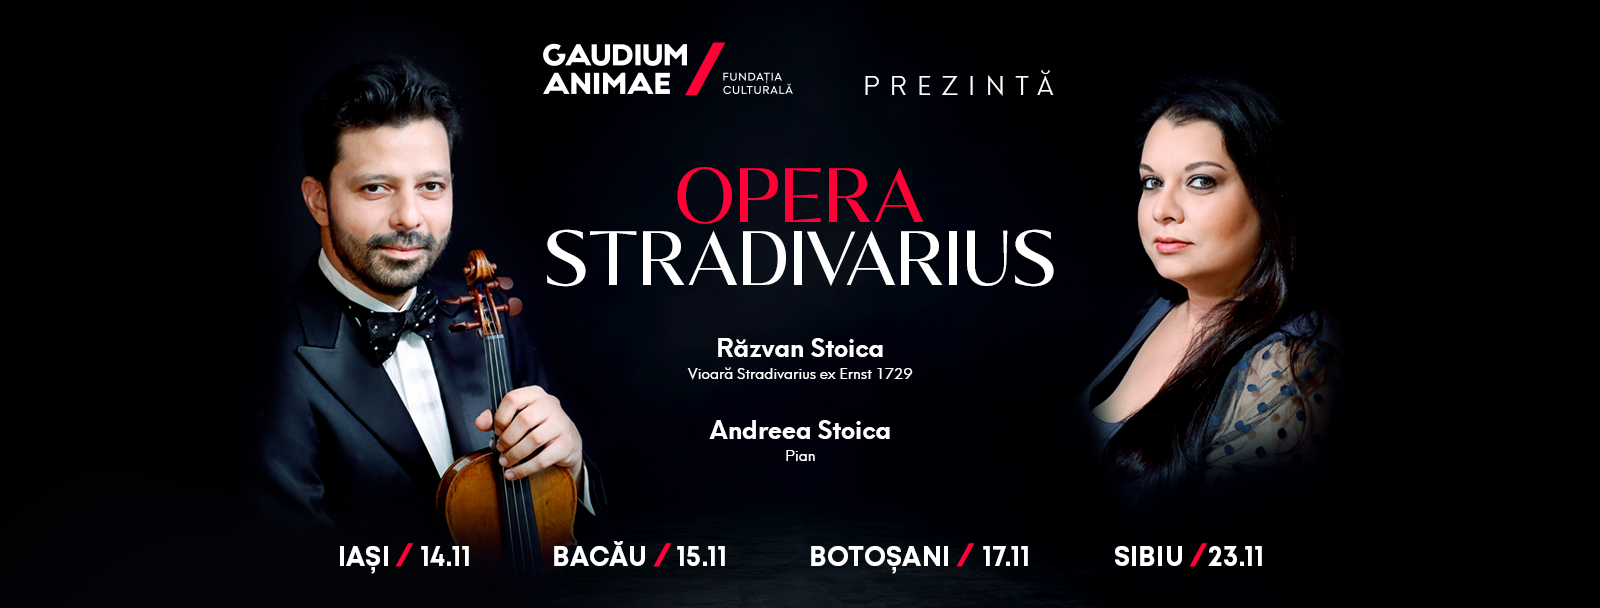 Opera Stradivarius cover-general